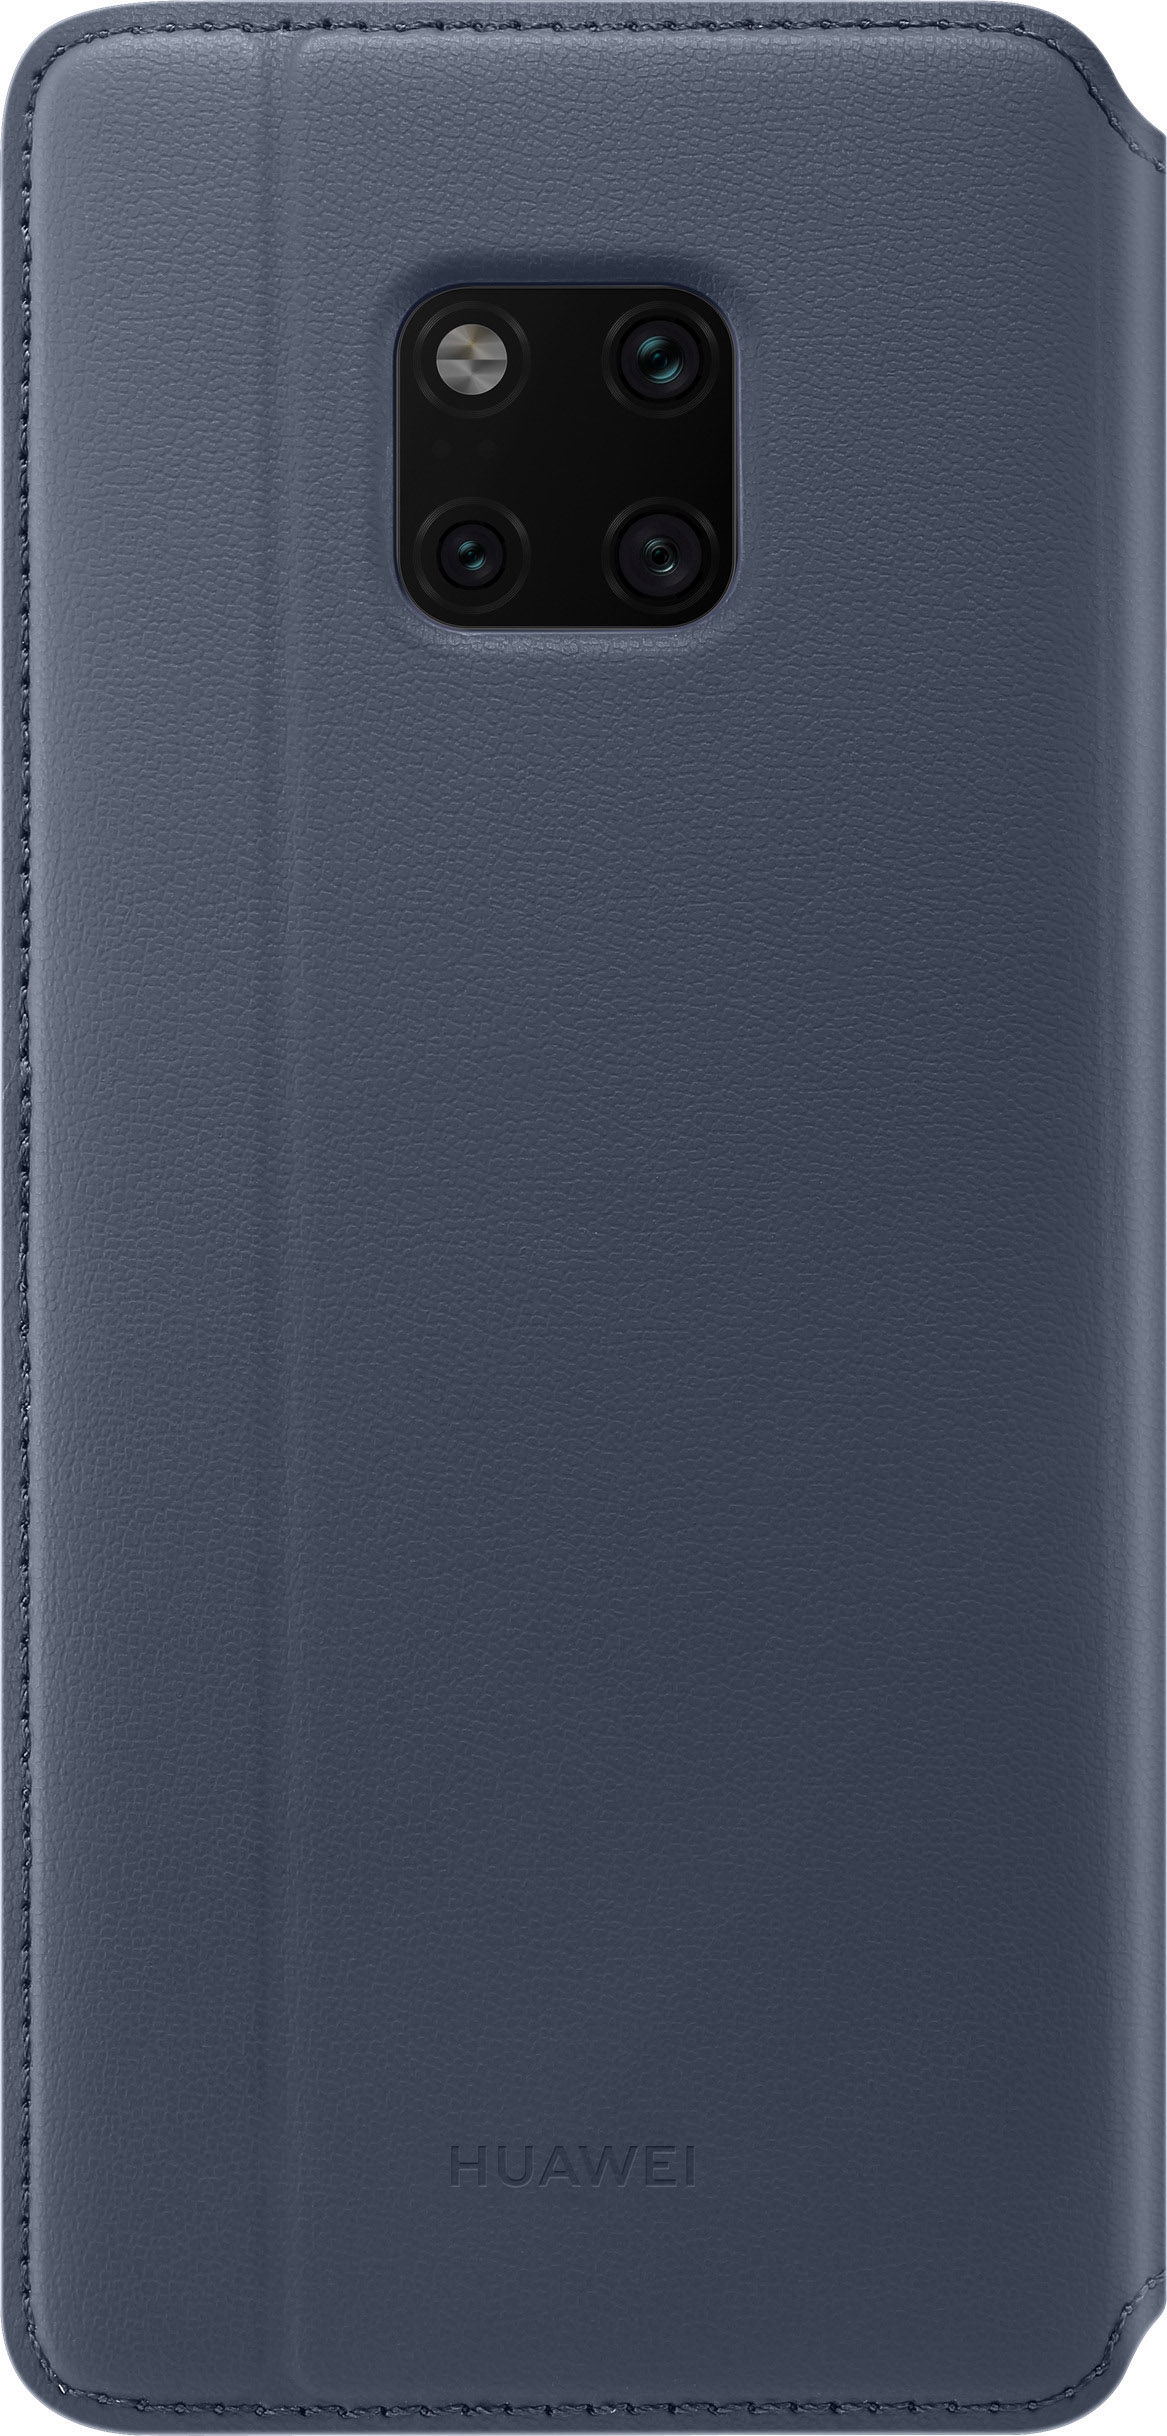 HUAWEI Wallet Cover, Bookcover, 20 Mate Huawei, Pro, Blau